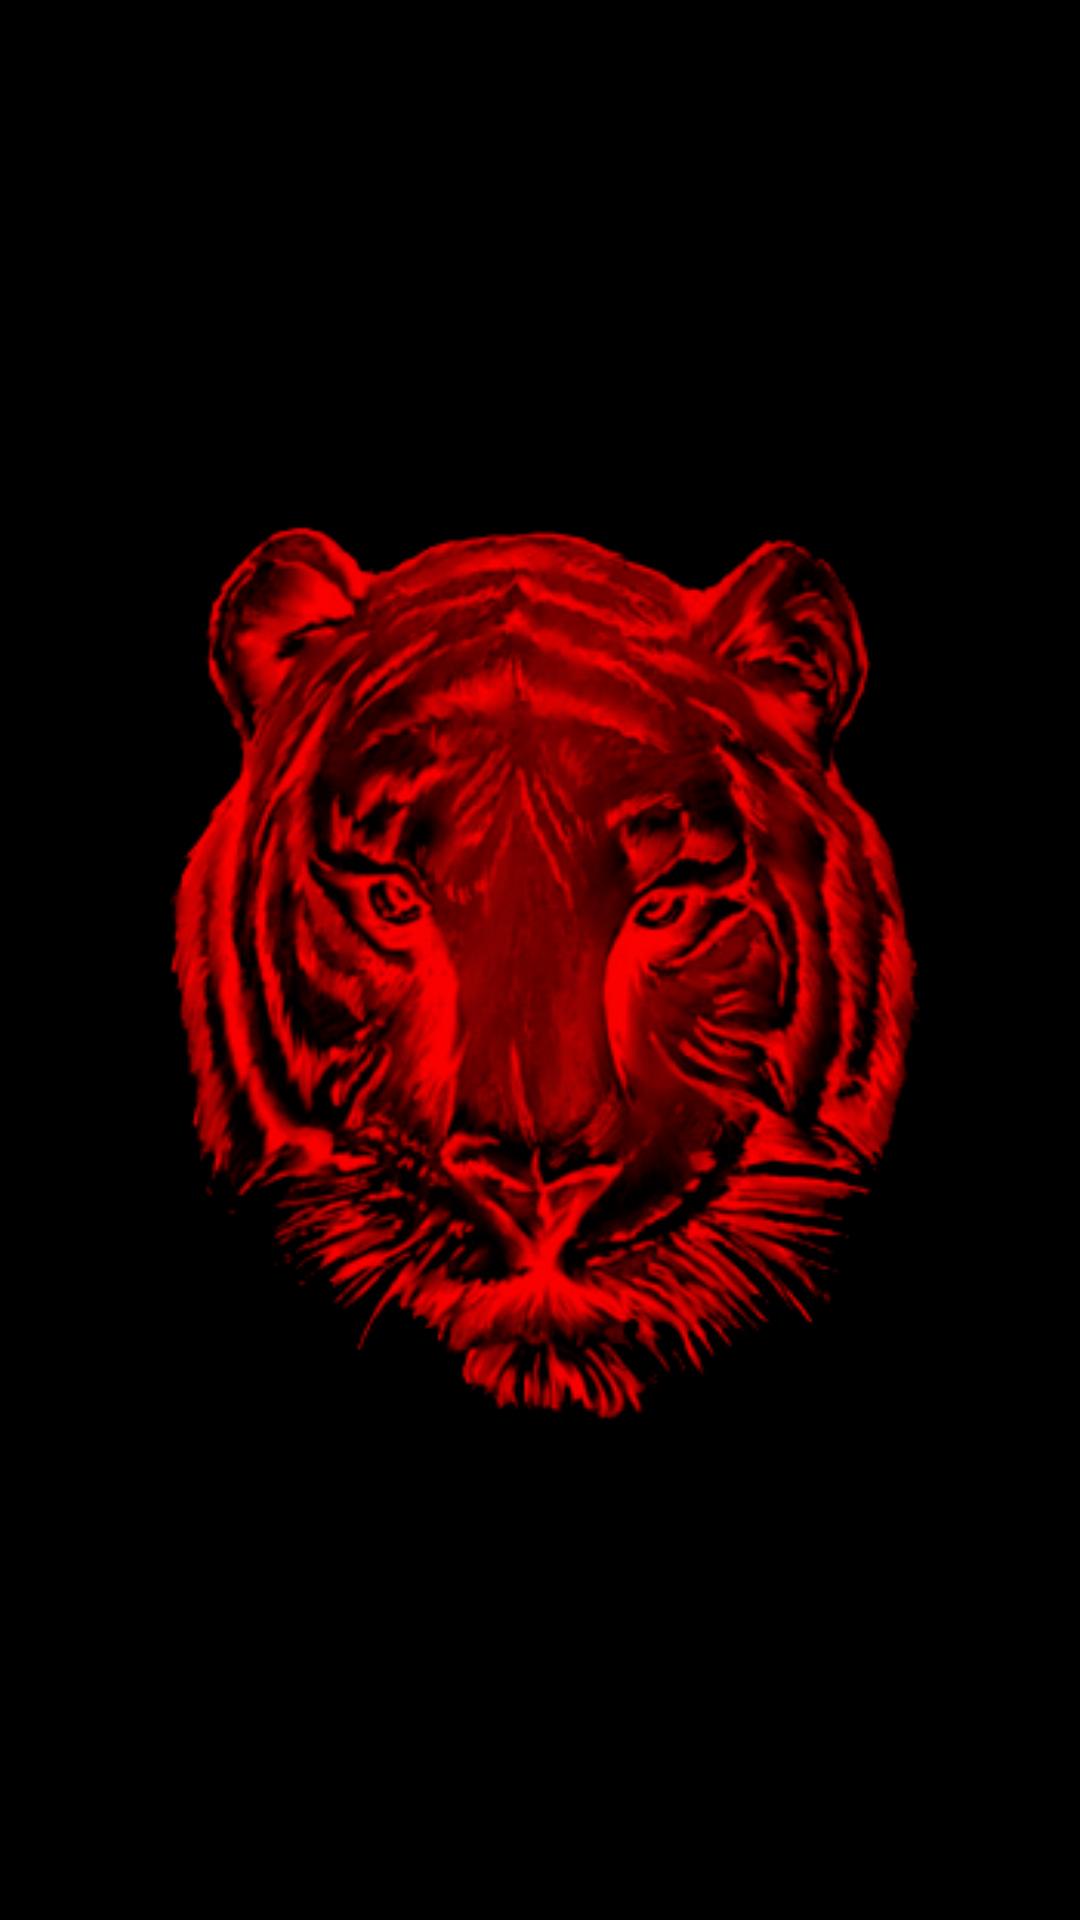 Tiger Mobile Wallpaper, Picture